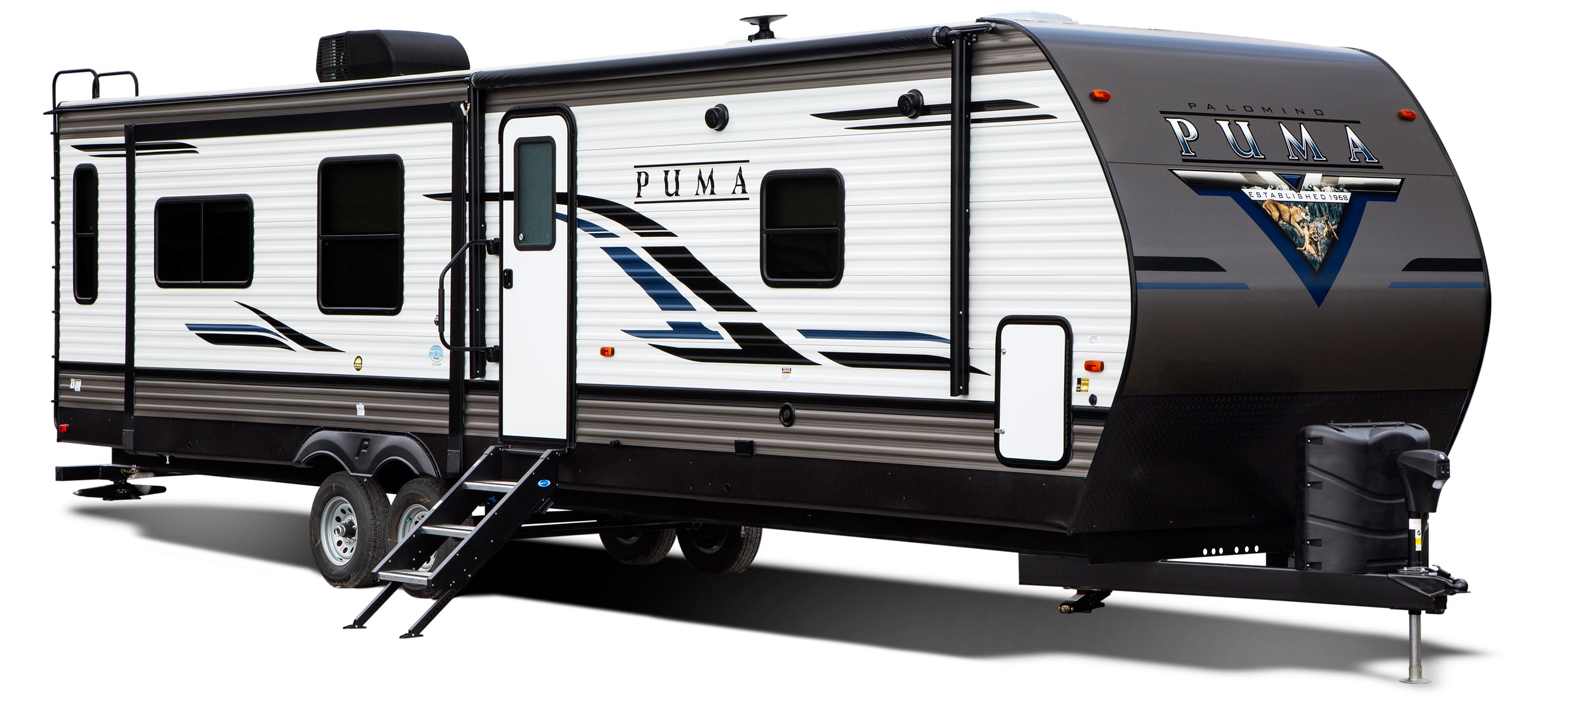 38 ft puma travel trailer